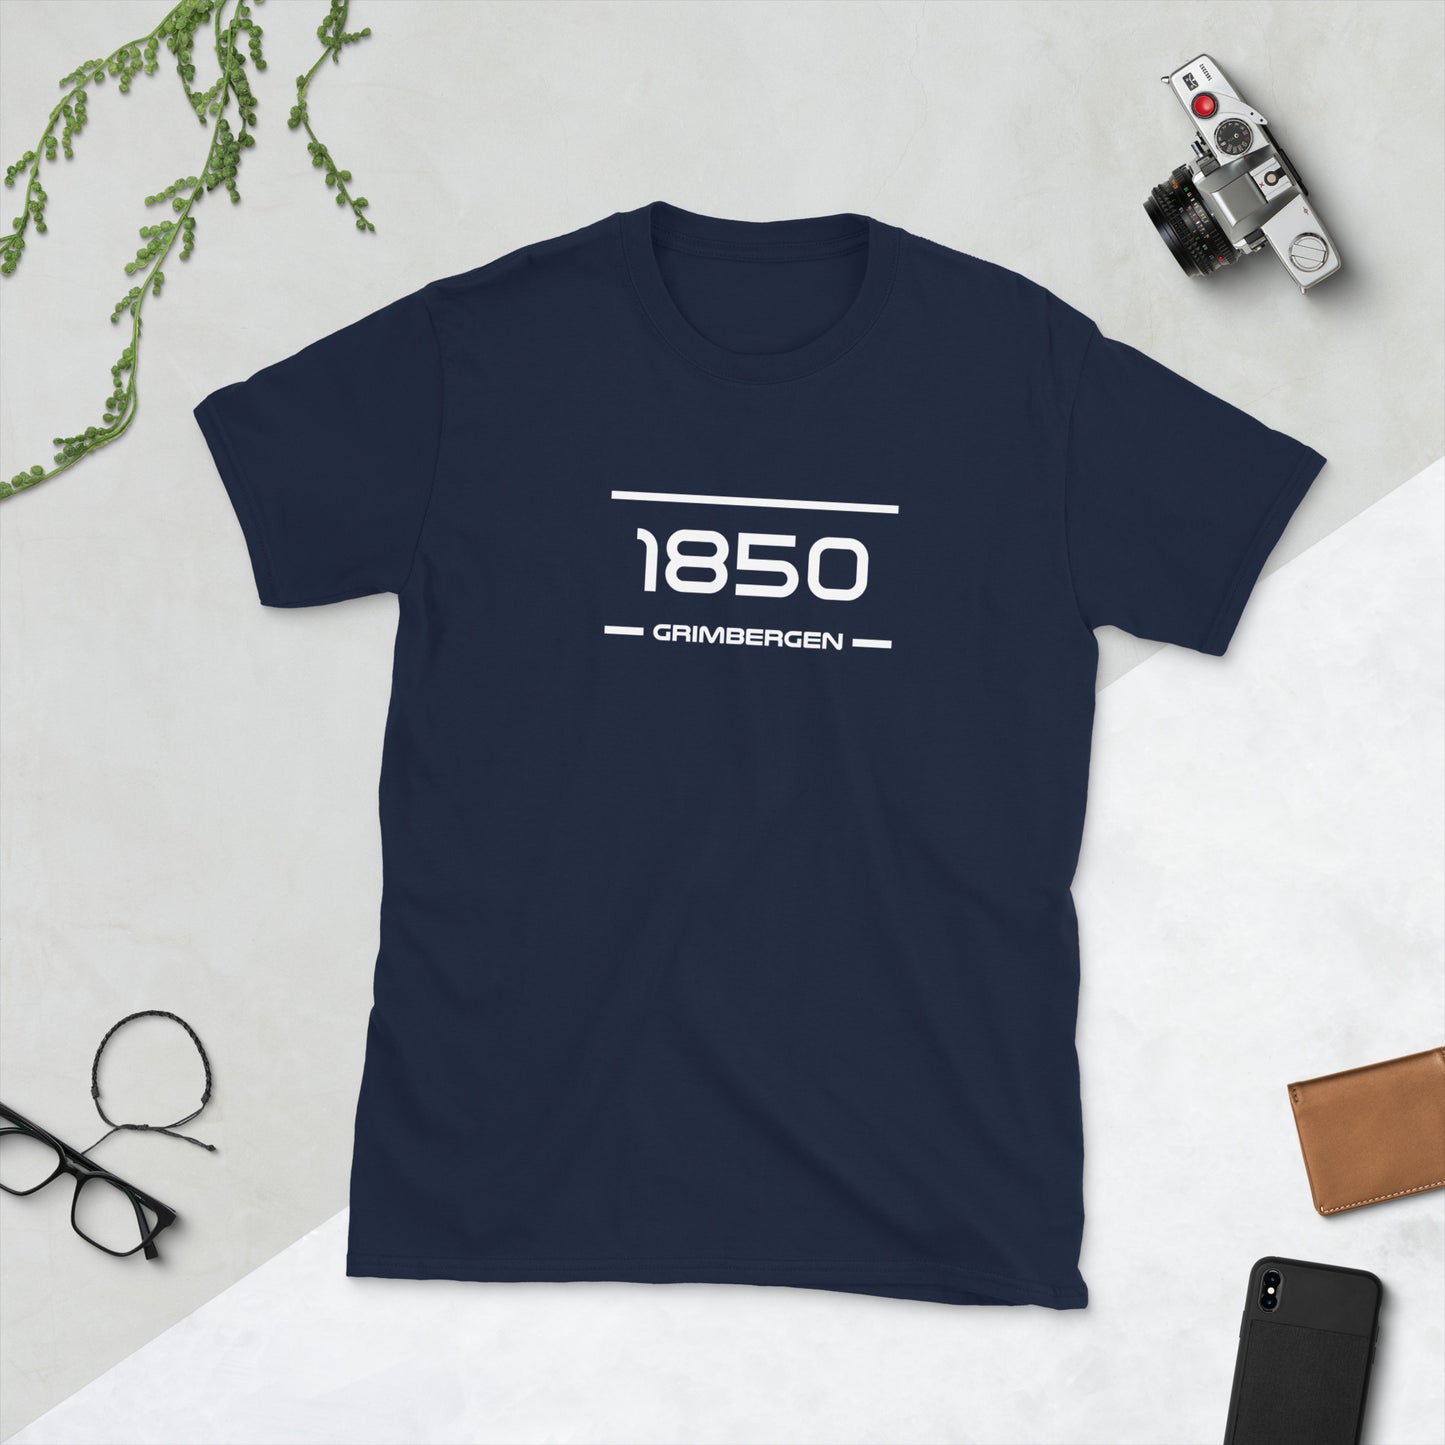 Tshirt - 1850 - Grimbergen